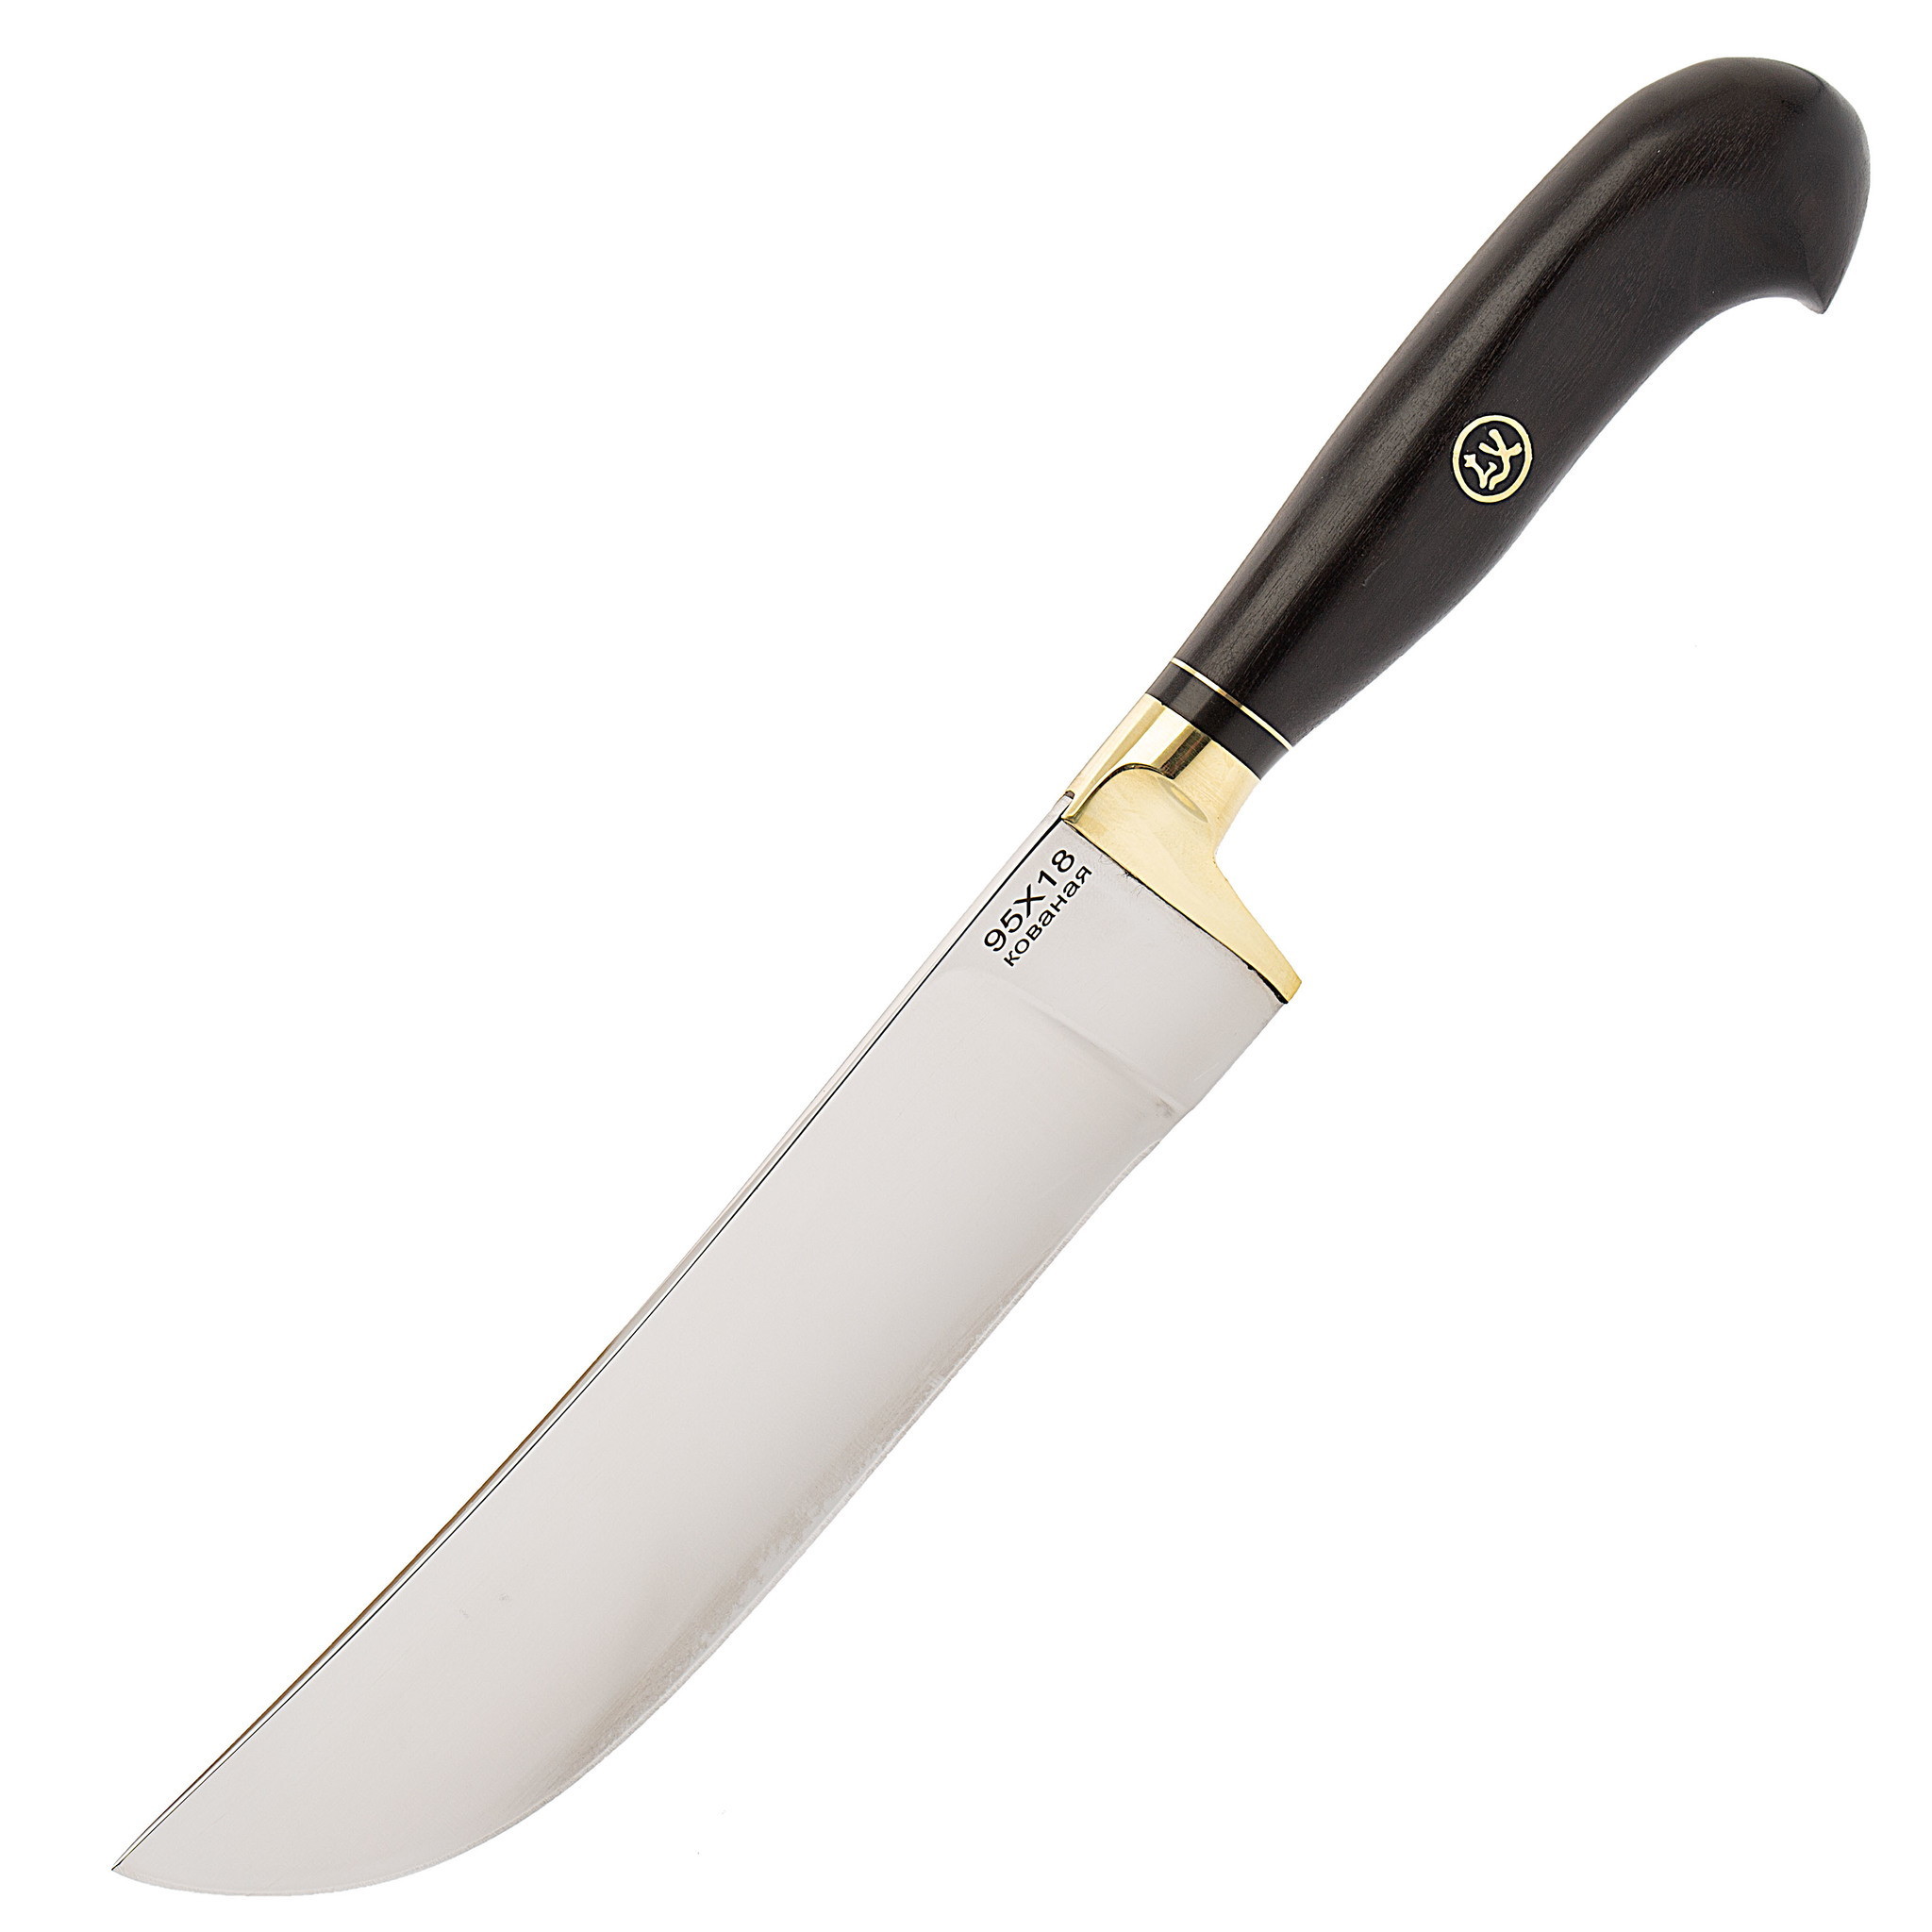 Нож Узбекский, сталь 95х18, граб нож узбекский сталь 95х18 граб